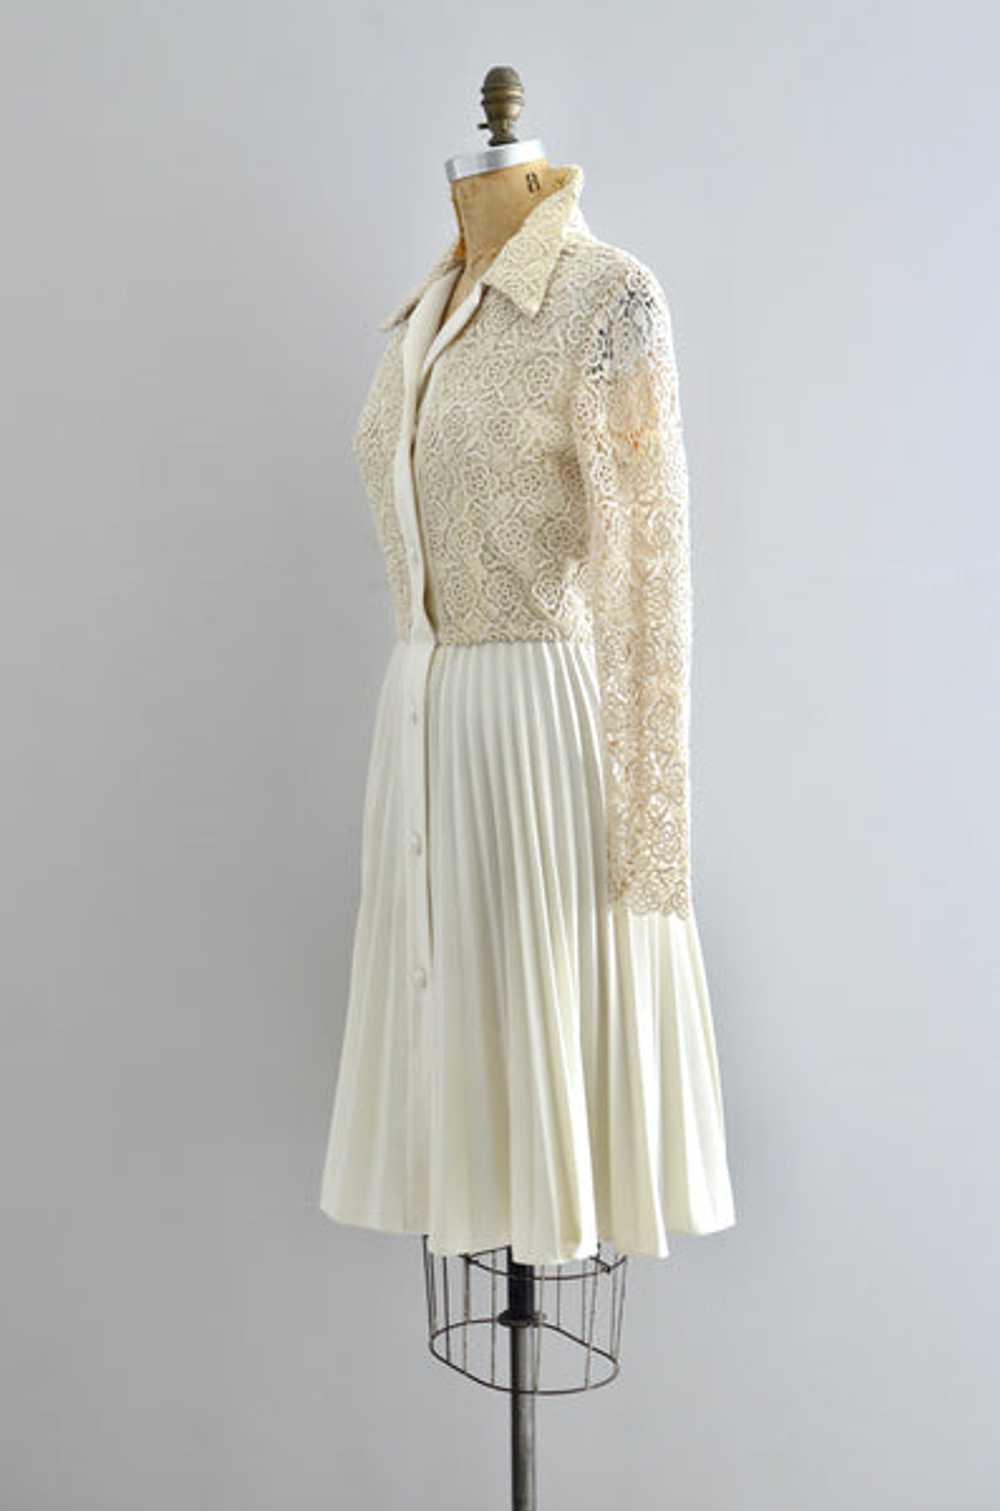 1970s Lace Dress - image 6